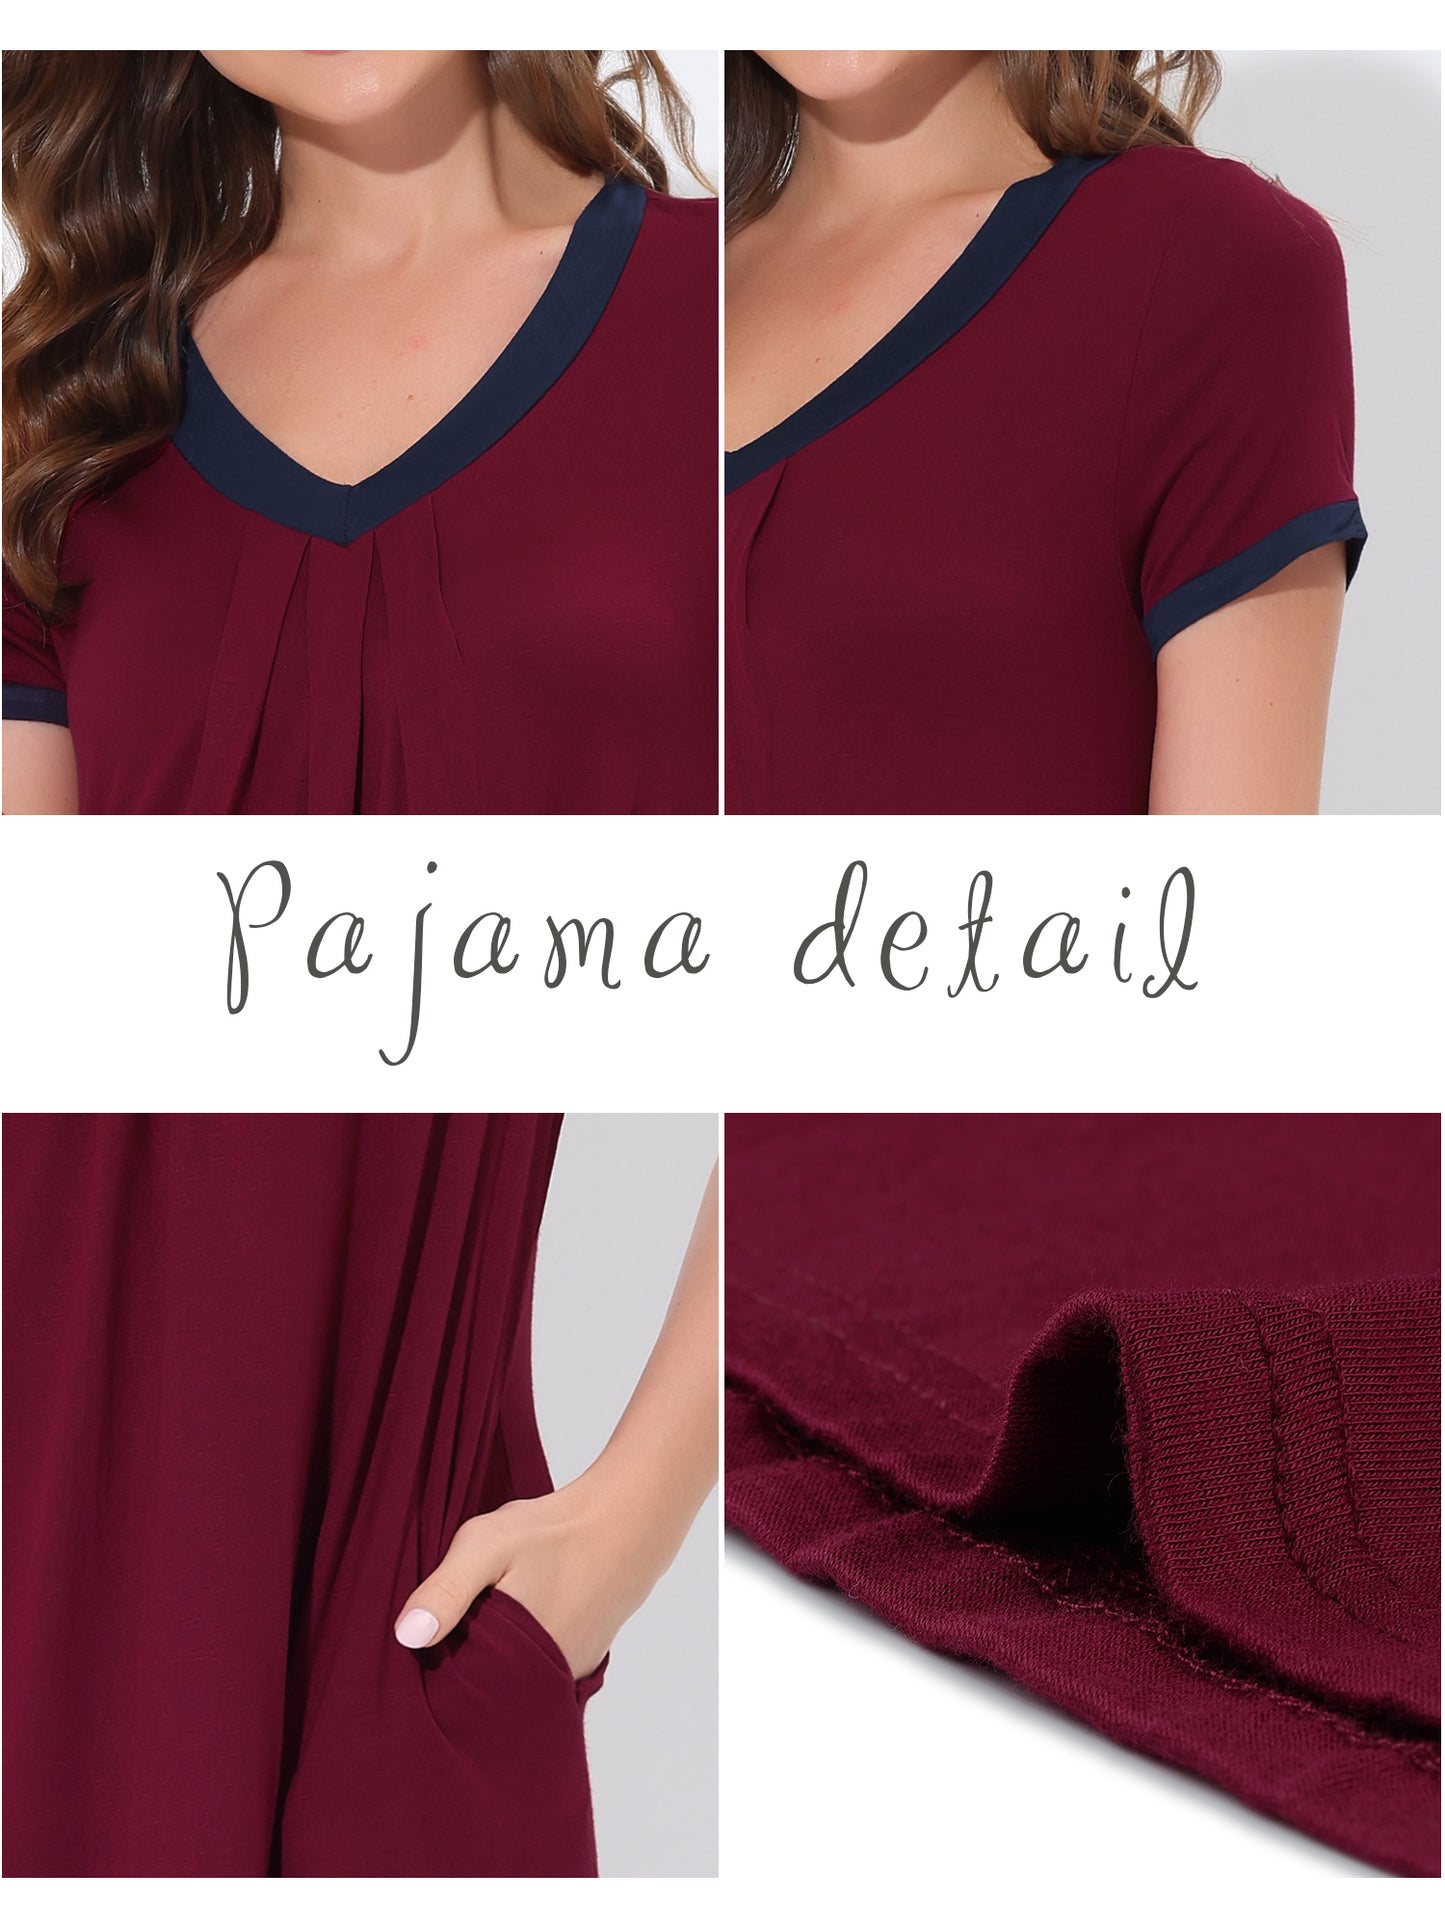 cheibear Pajama Dress Nightshirt Sleepwear V-Neck with Pockets Lounge Nightgown Red